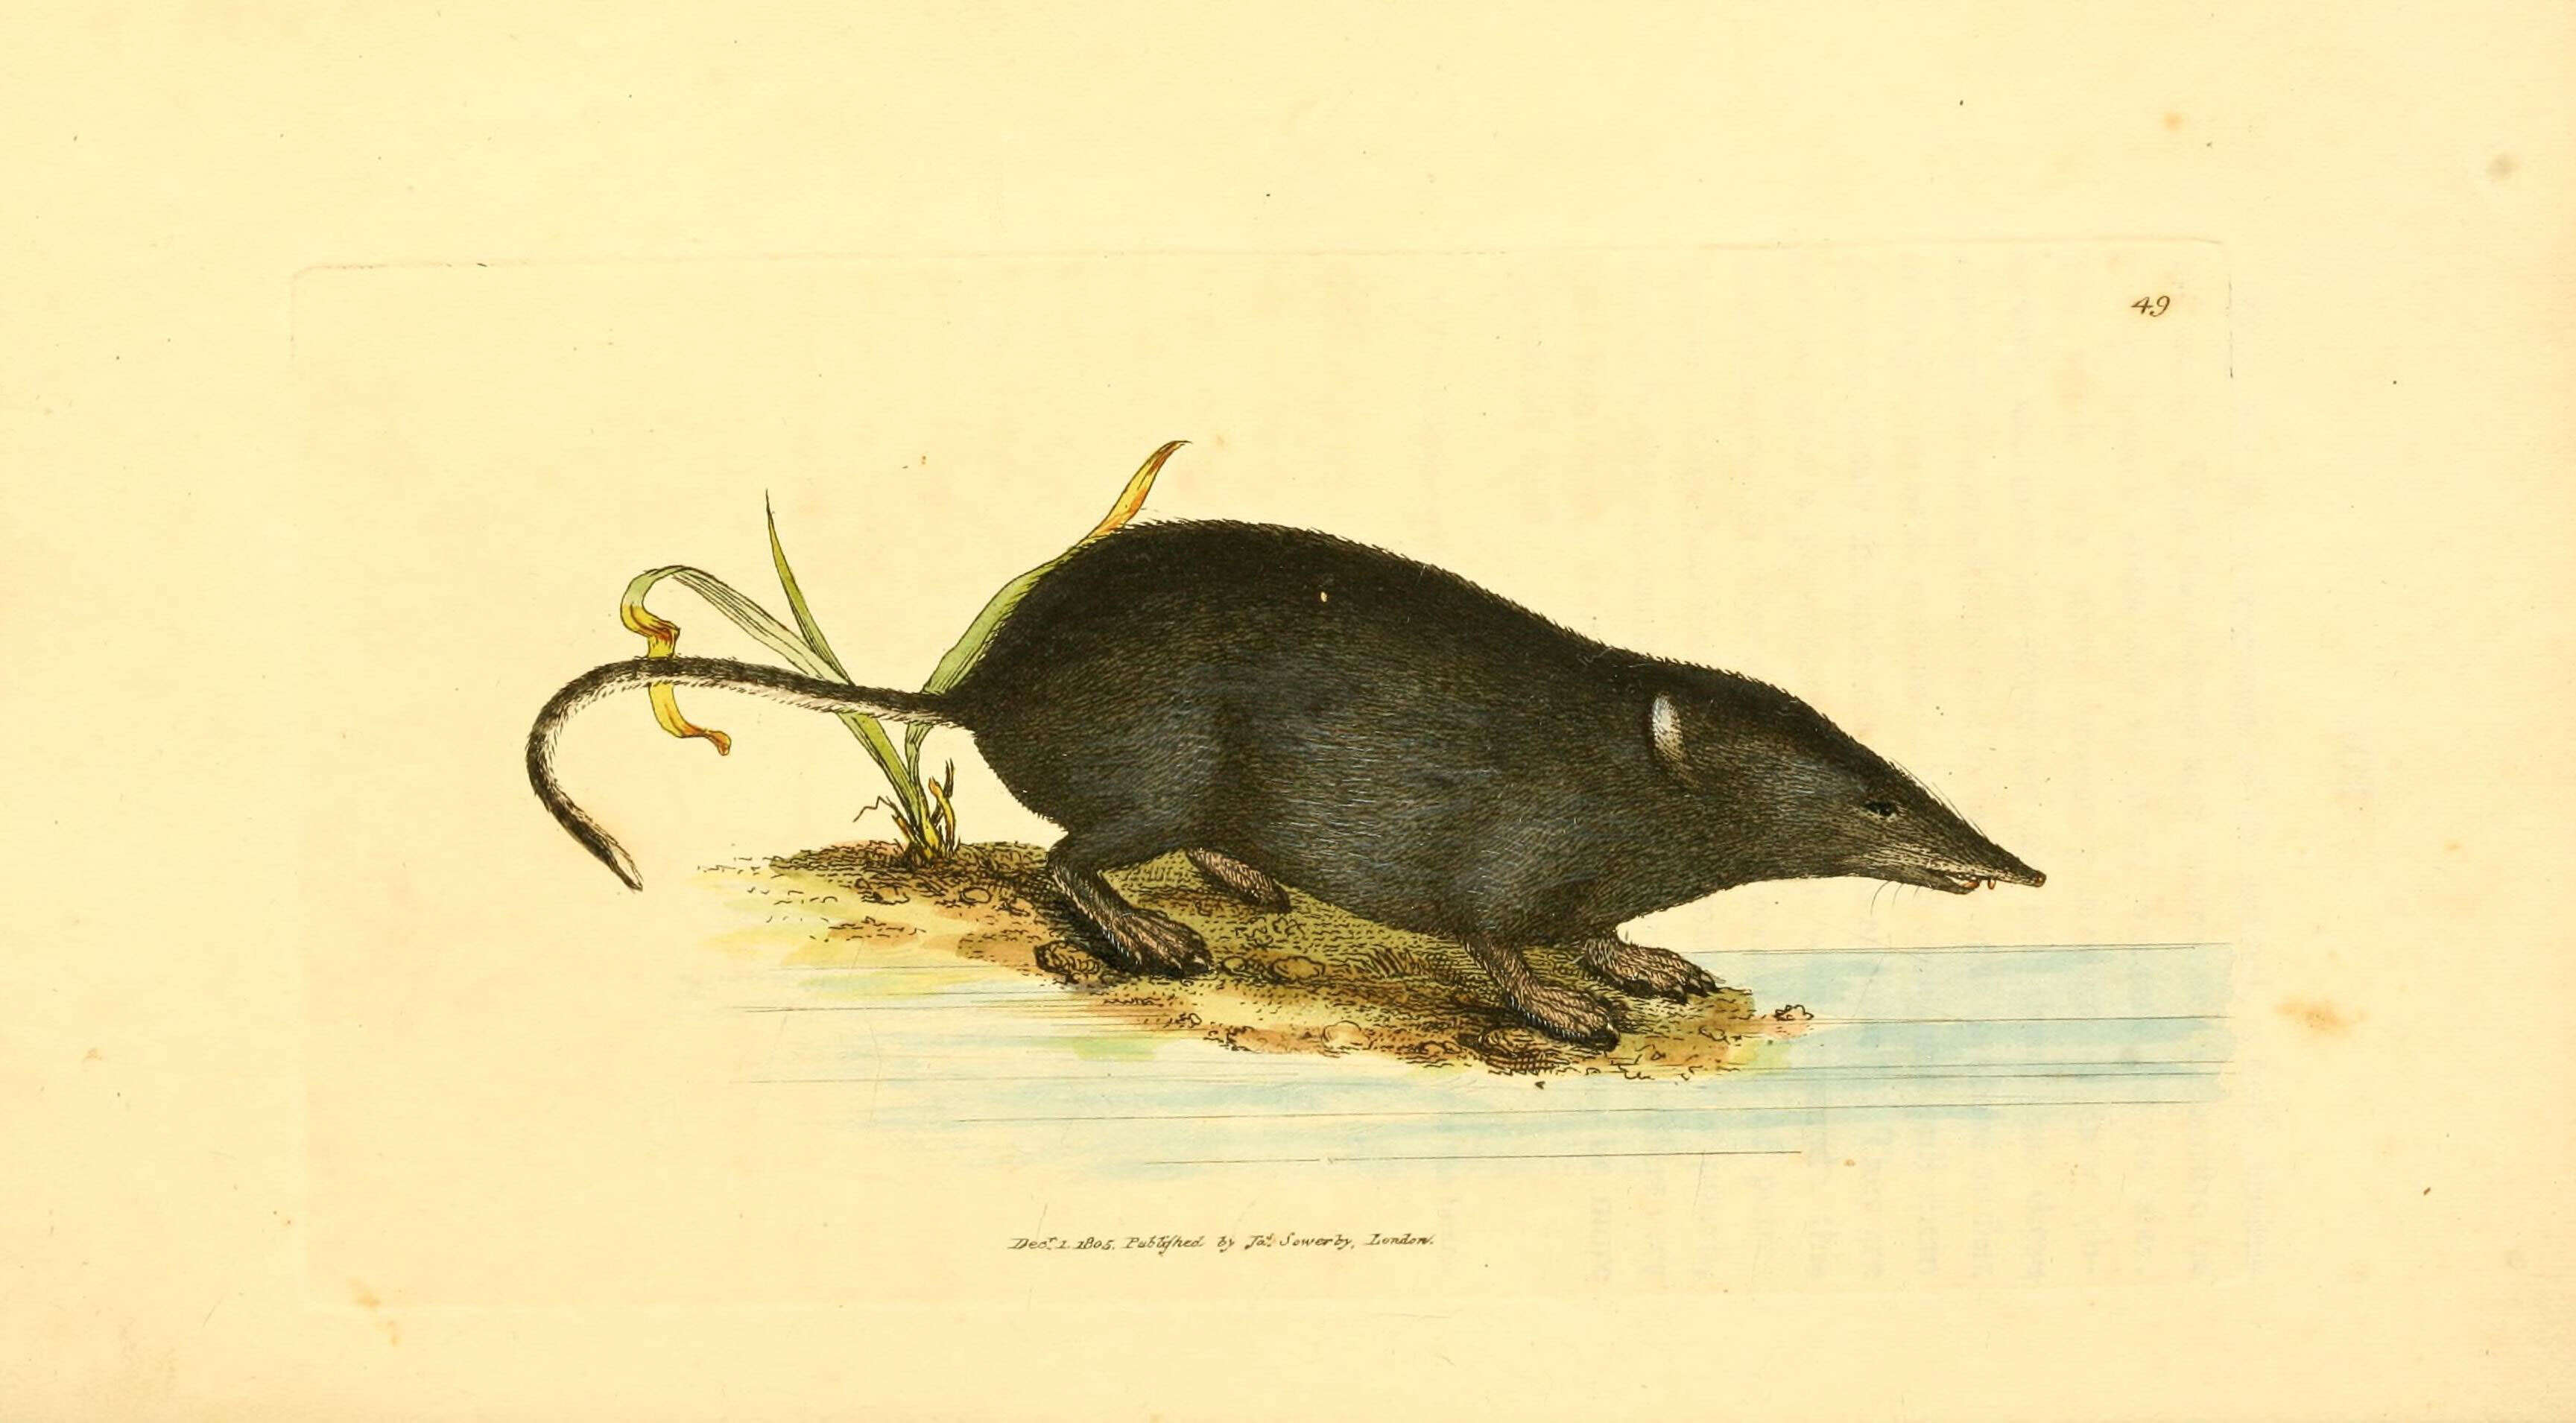 Image of Nectogalini Anderson 1879